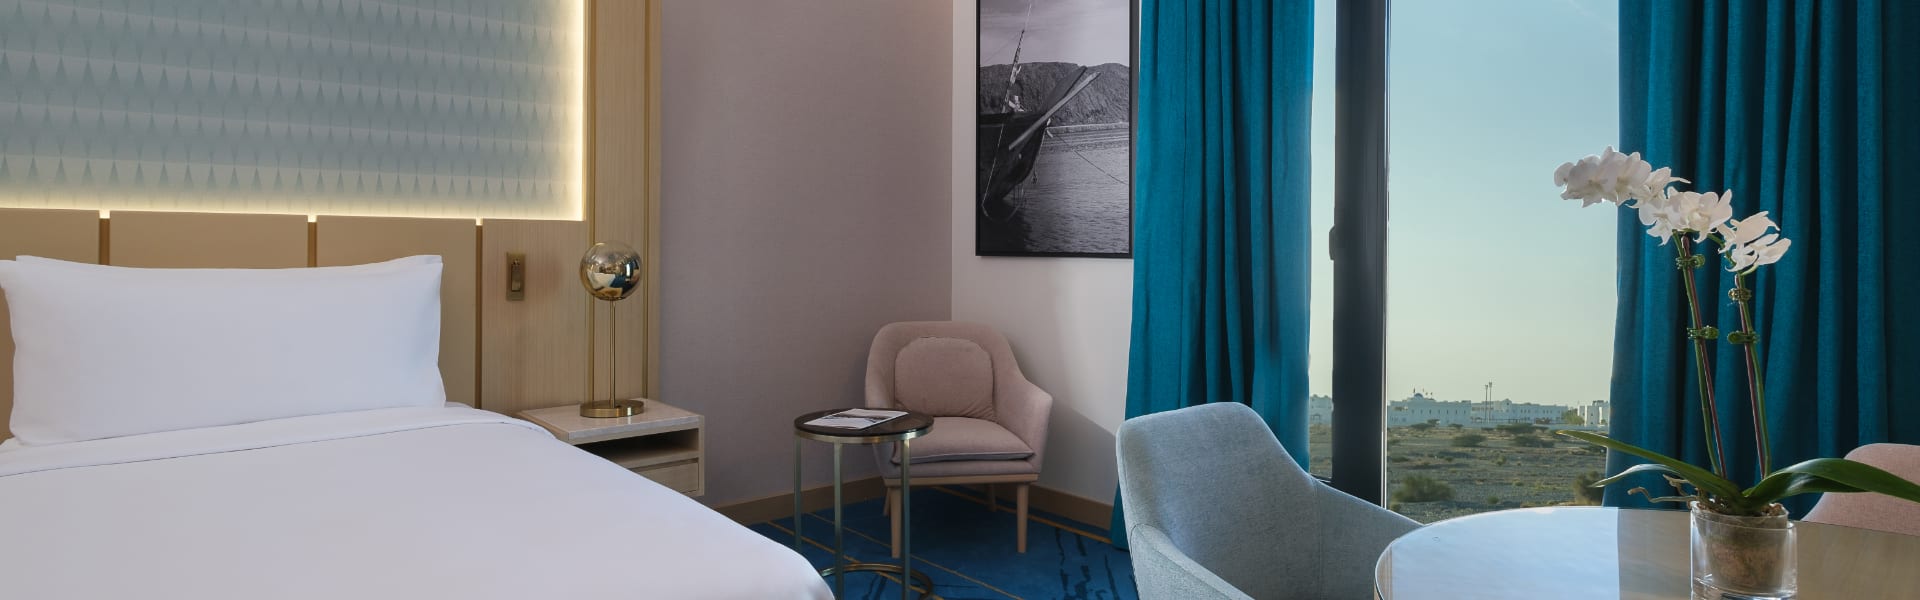 Standard Room, Stylish comfort with urban views at Avani Muscat Hotel &amp; Suites, Al Seeb, Muscat, Oman